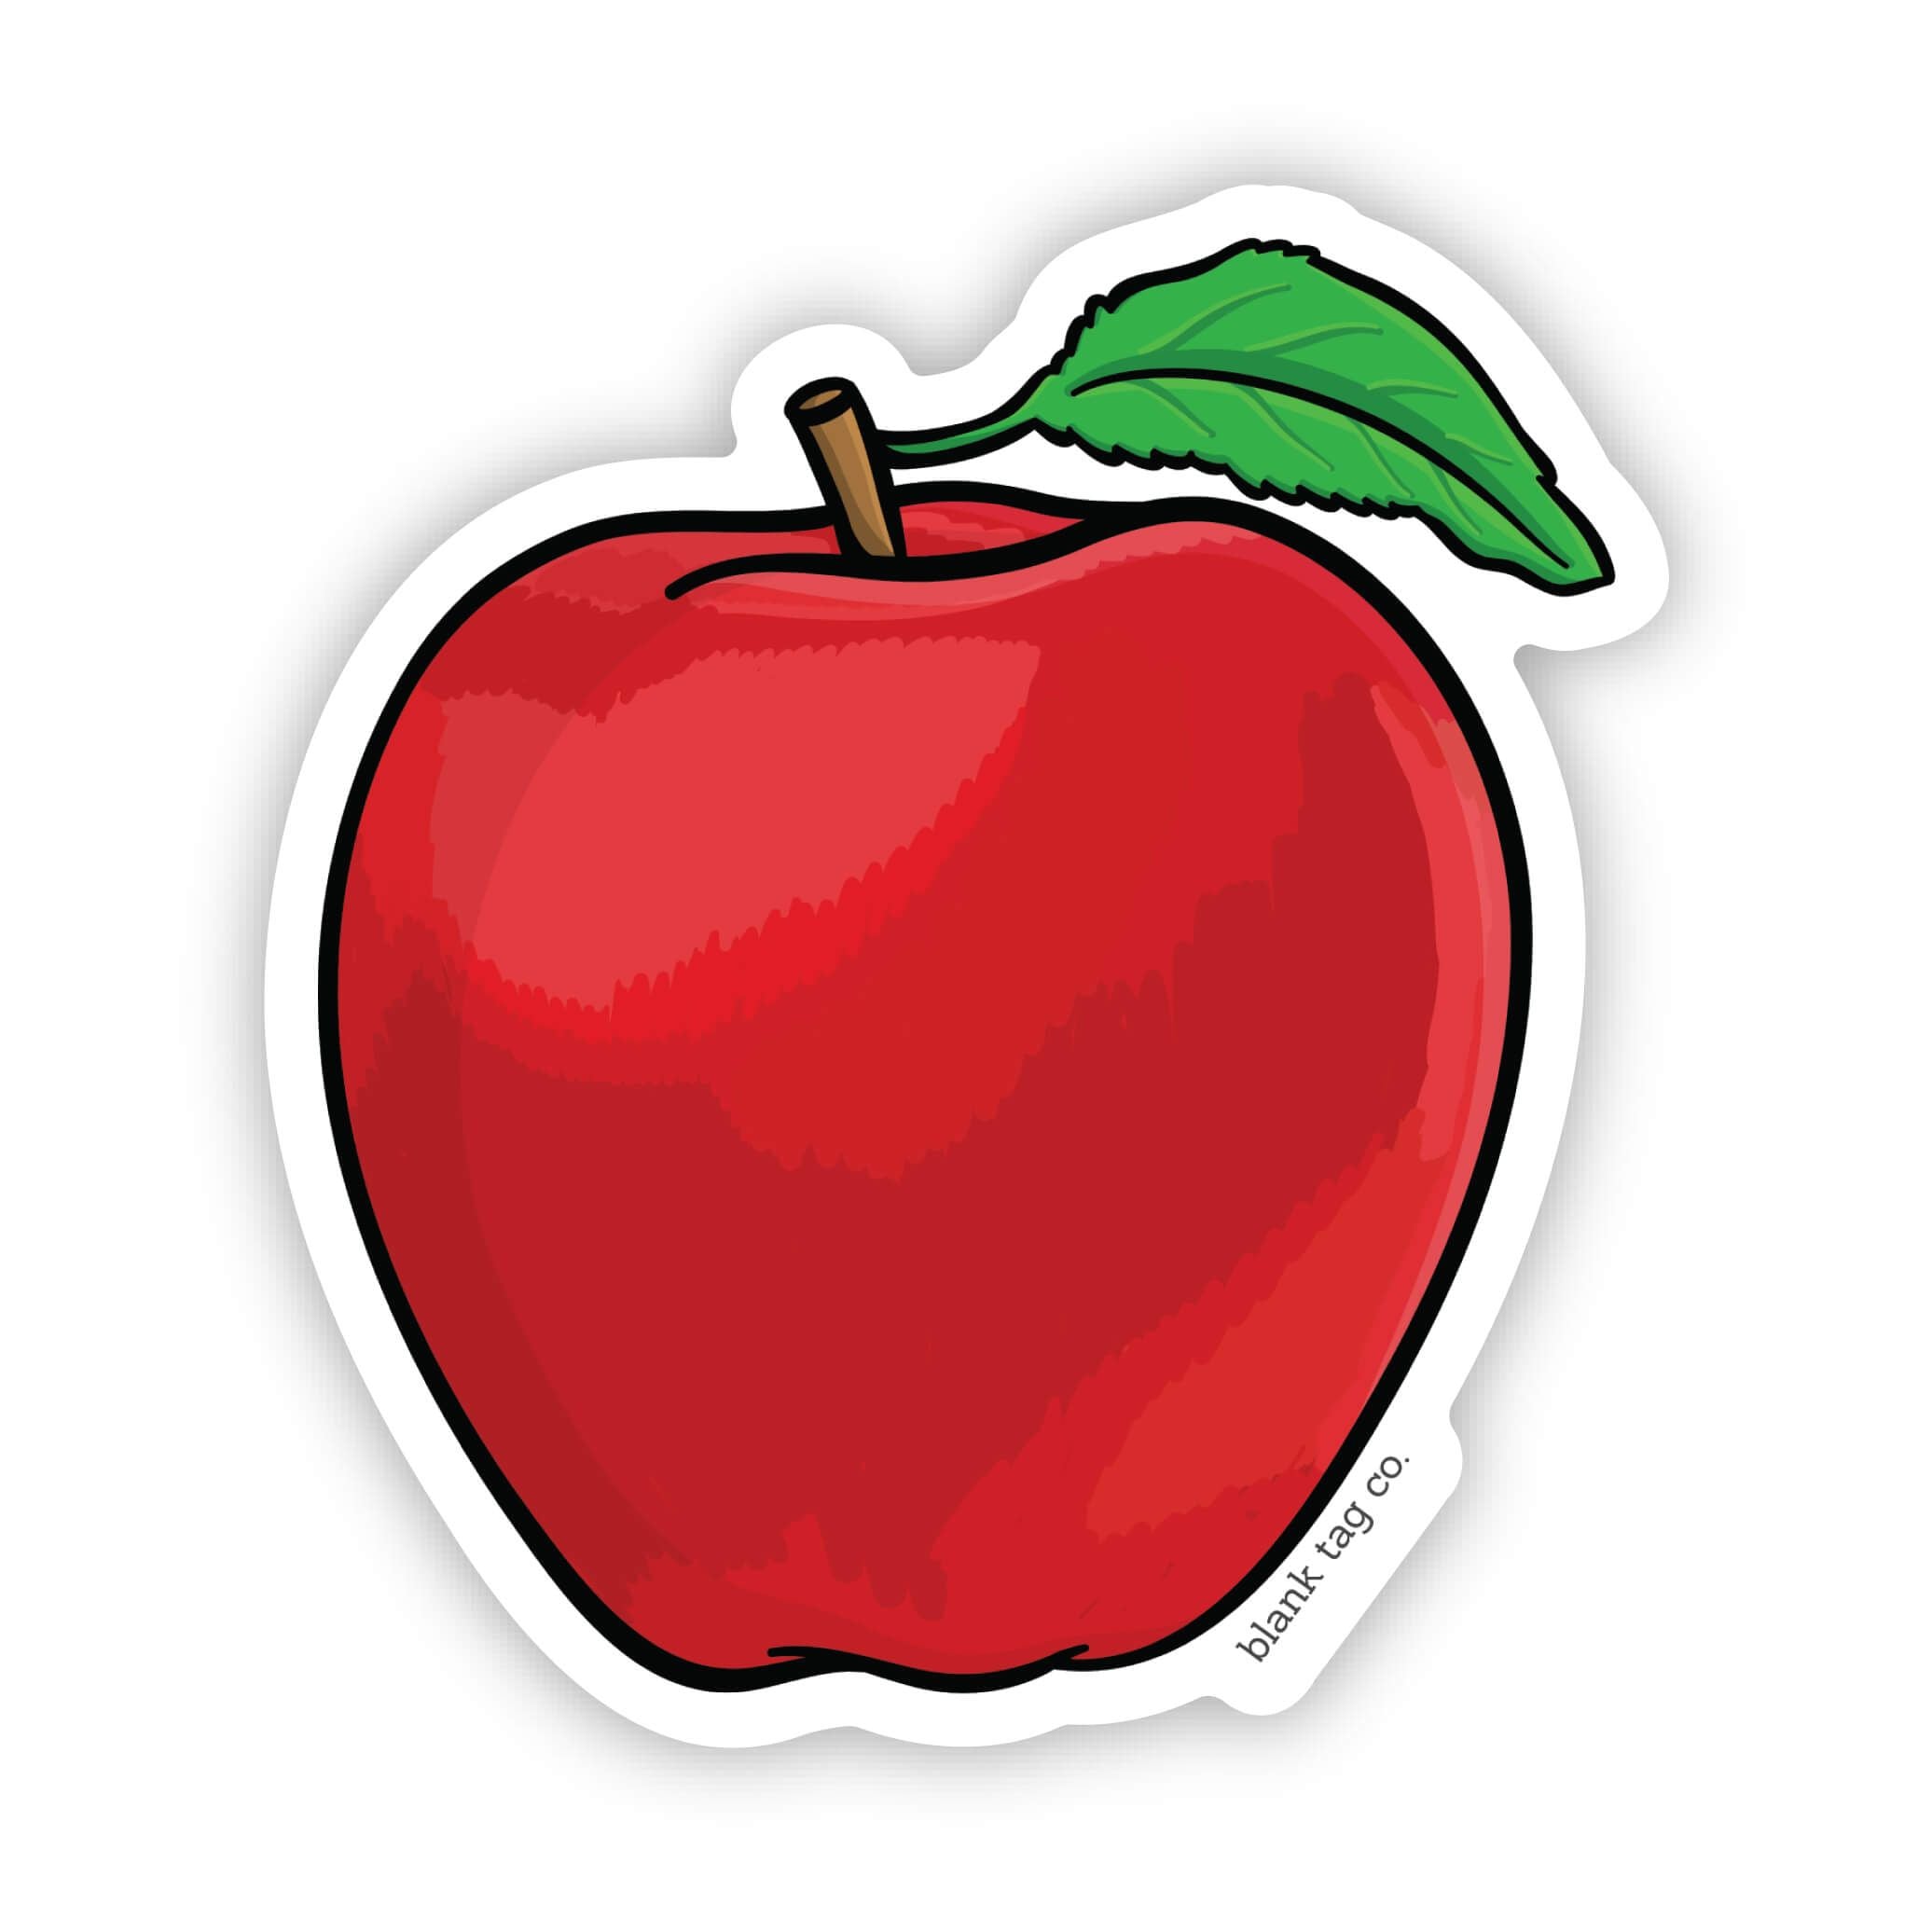 The Apple Sticker